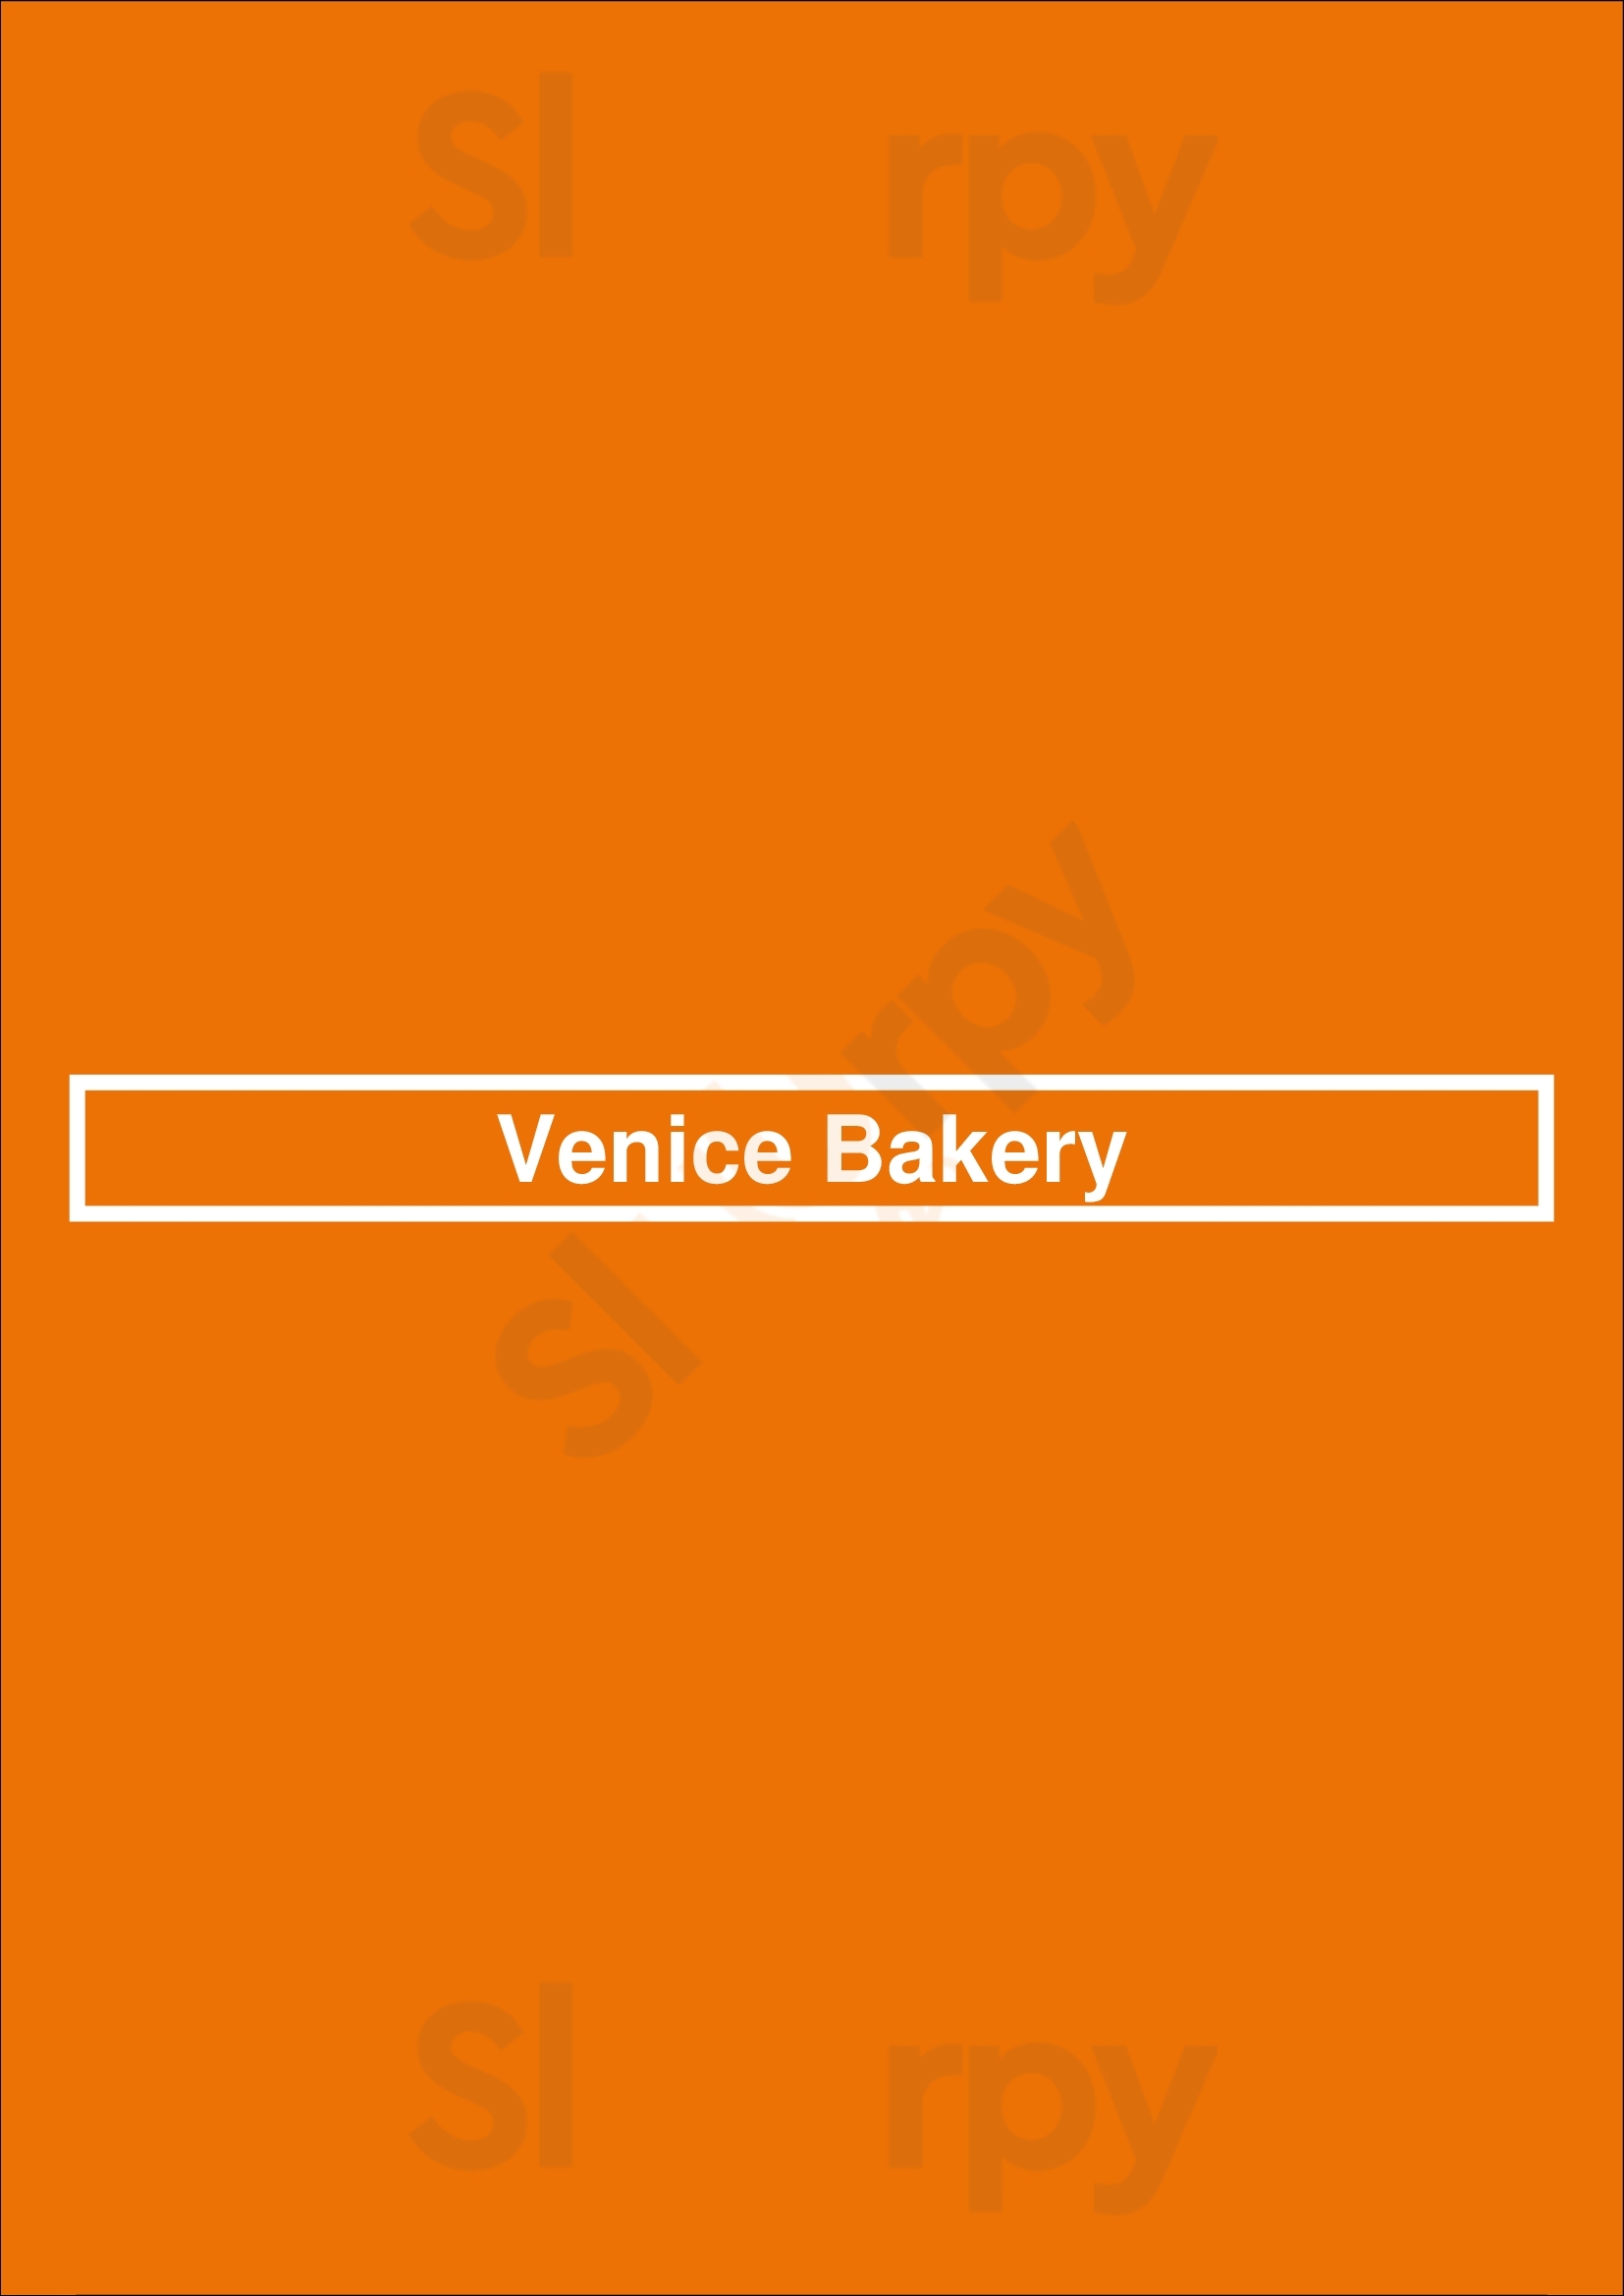 Venice Bakery & Restaurant Los Angeles Menu - 1